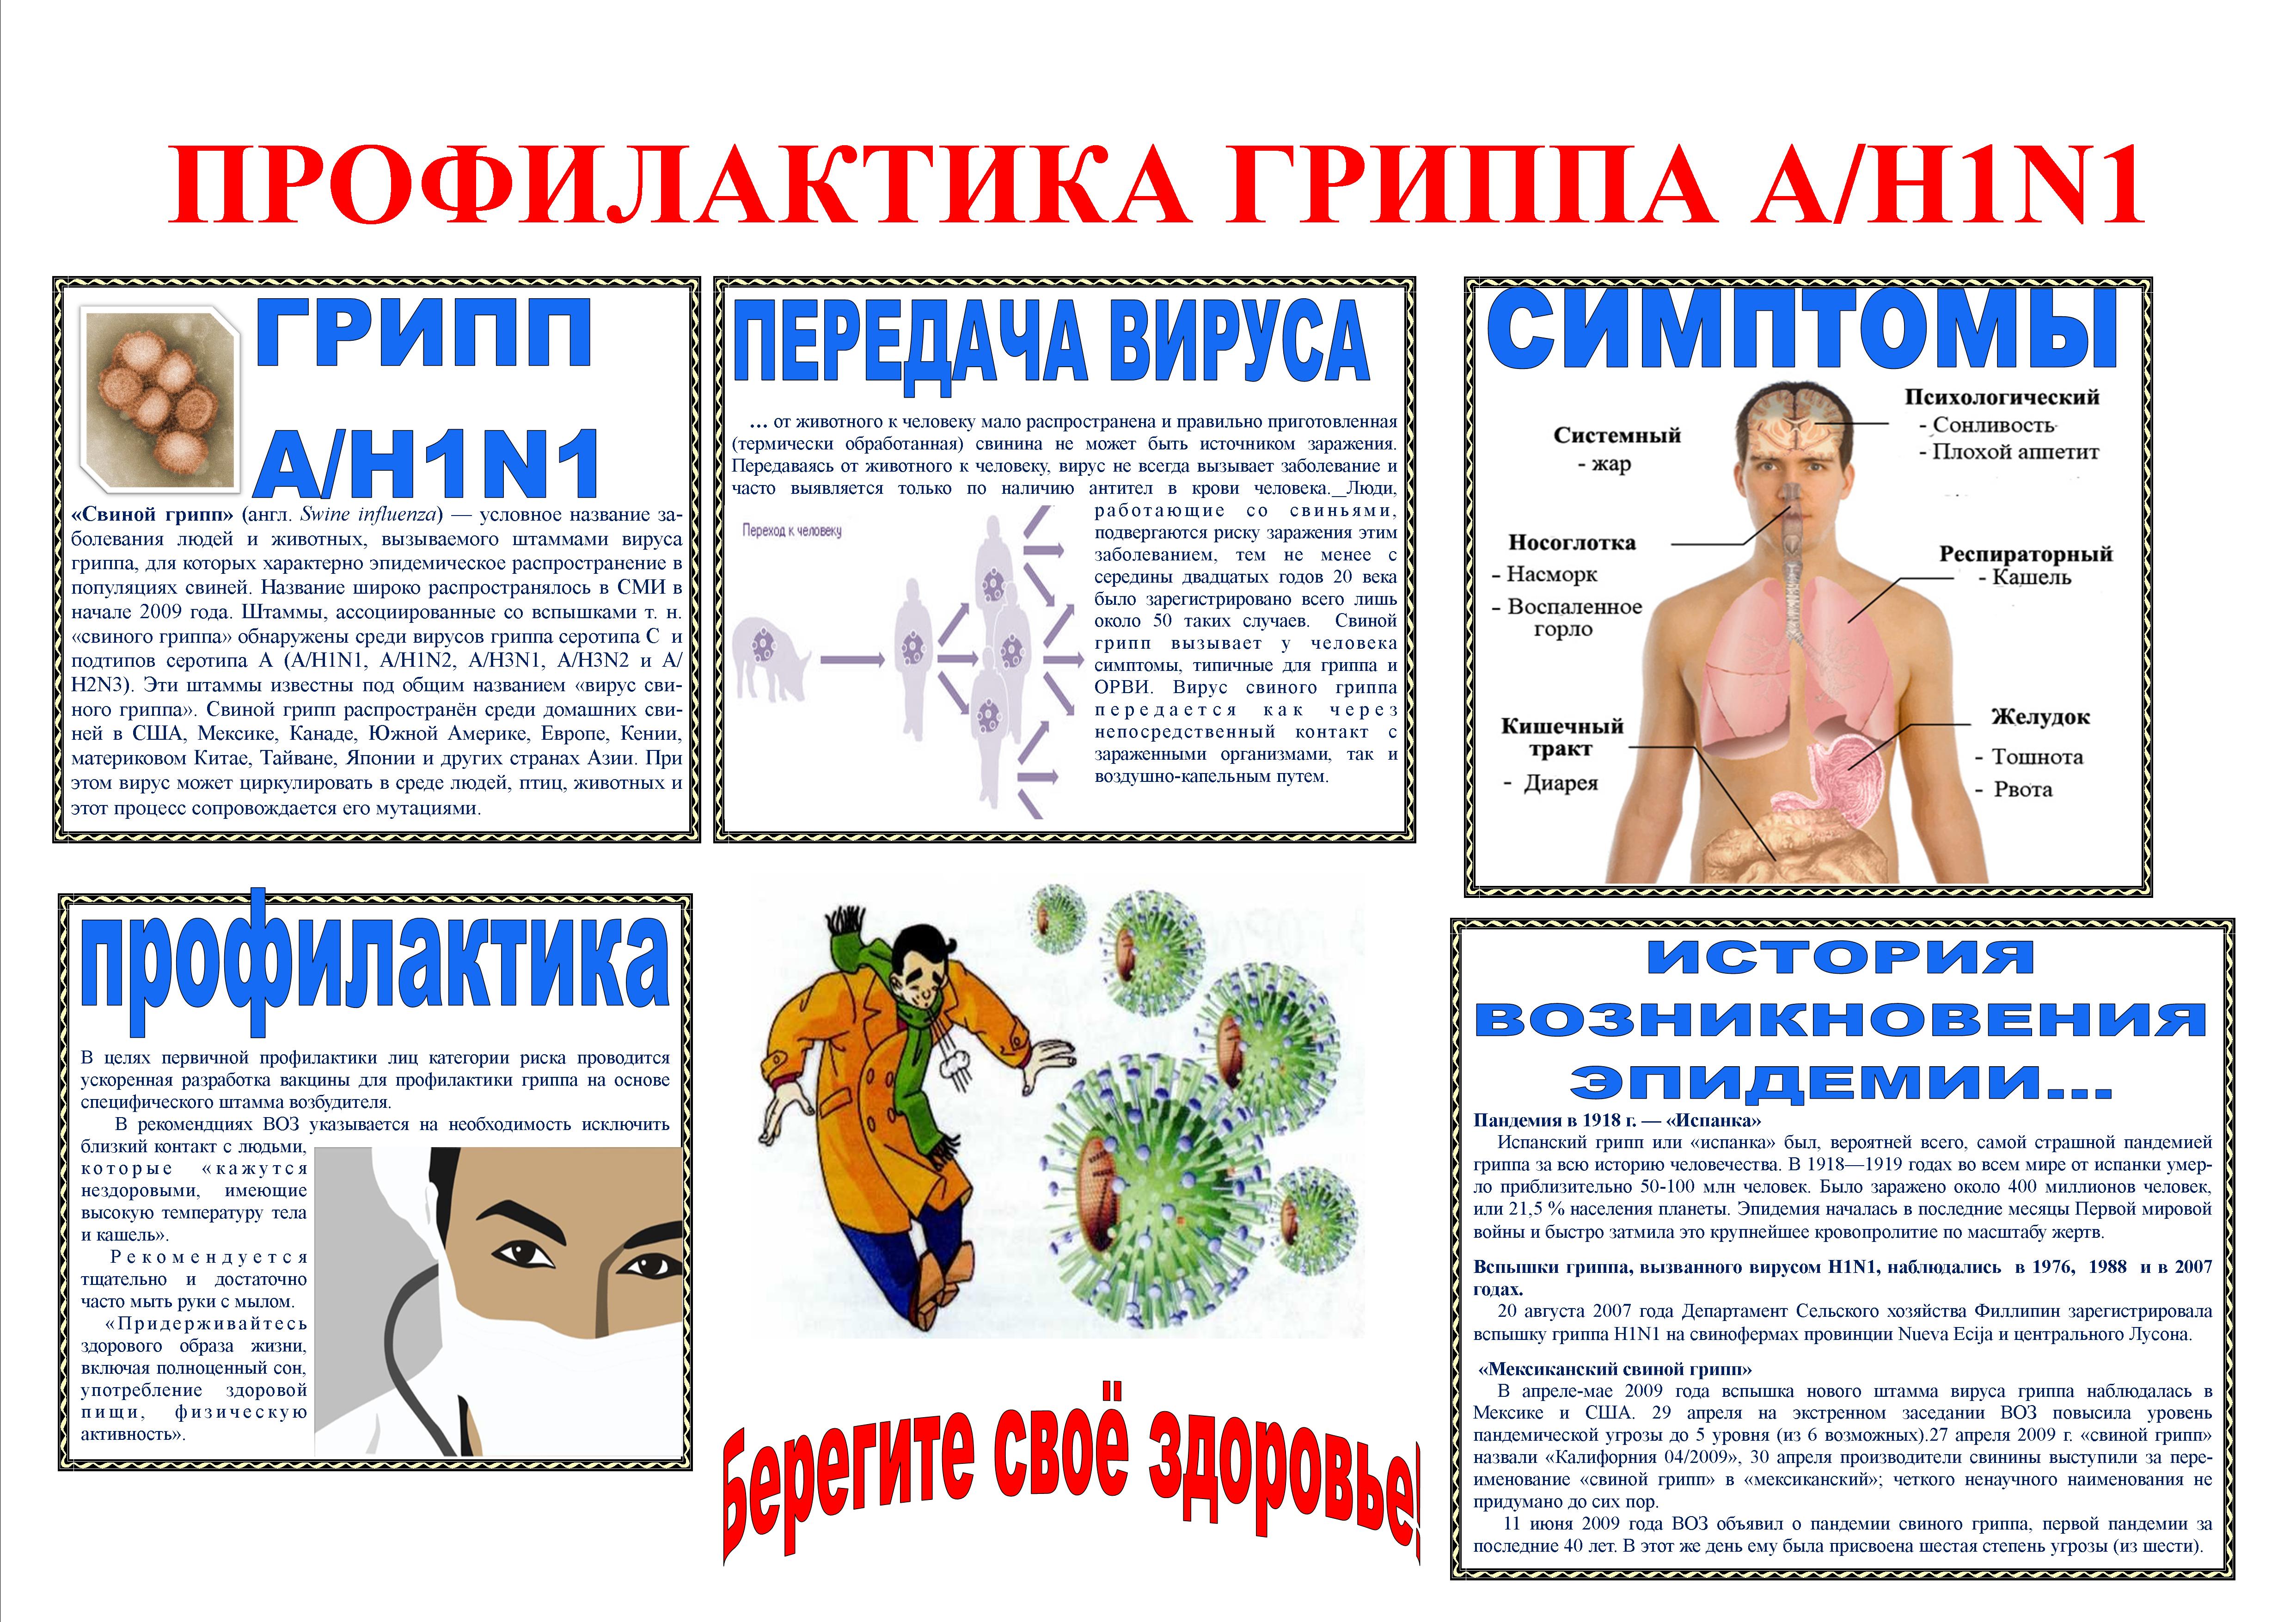 Заболевание тем не менее. Плакат профилактика вирусных инфекций. Профилактика вирусных заболеваний плакат. Профилактика гриппа. Профилактика гриппа плакат.